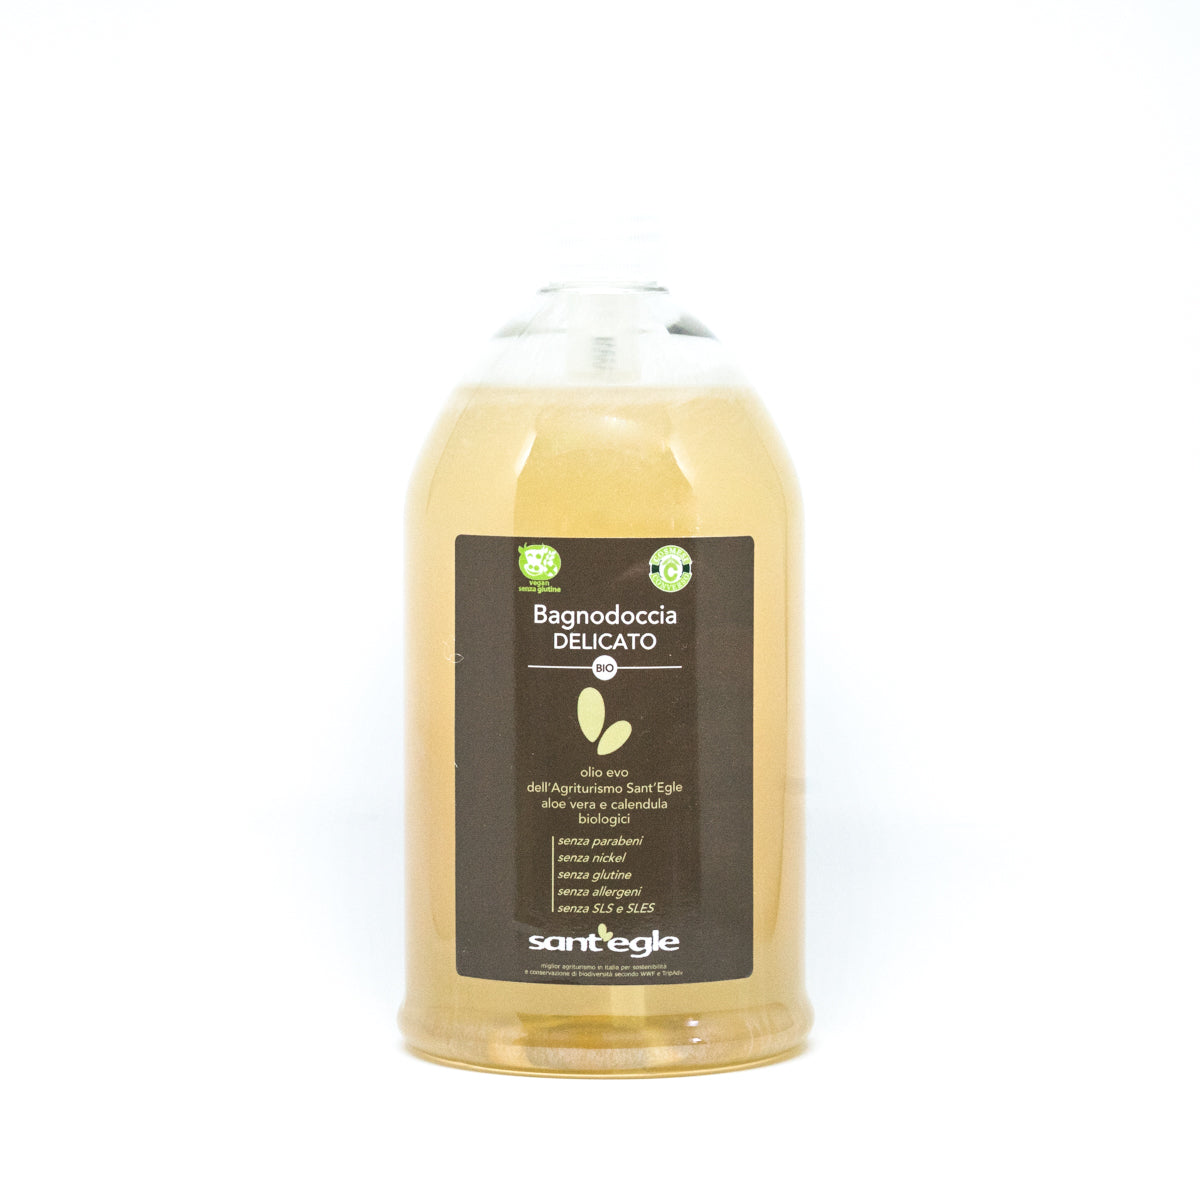 Shower gel, organic soap with organic EVO oil, 1 lt